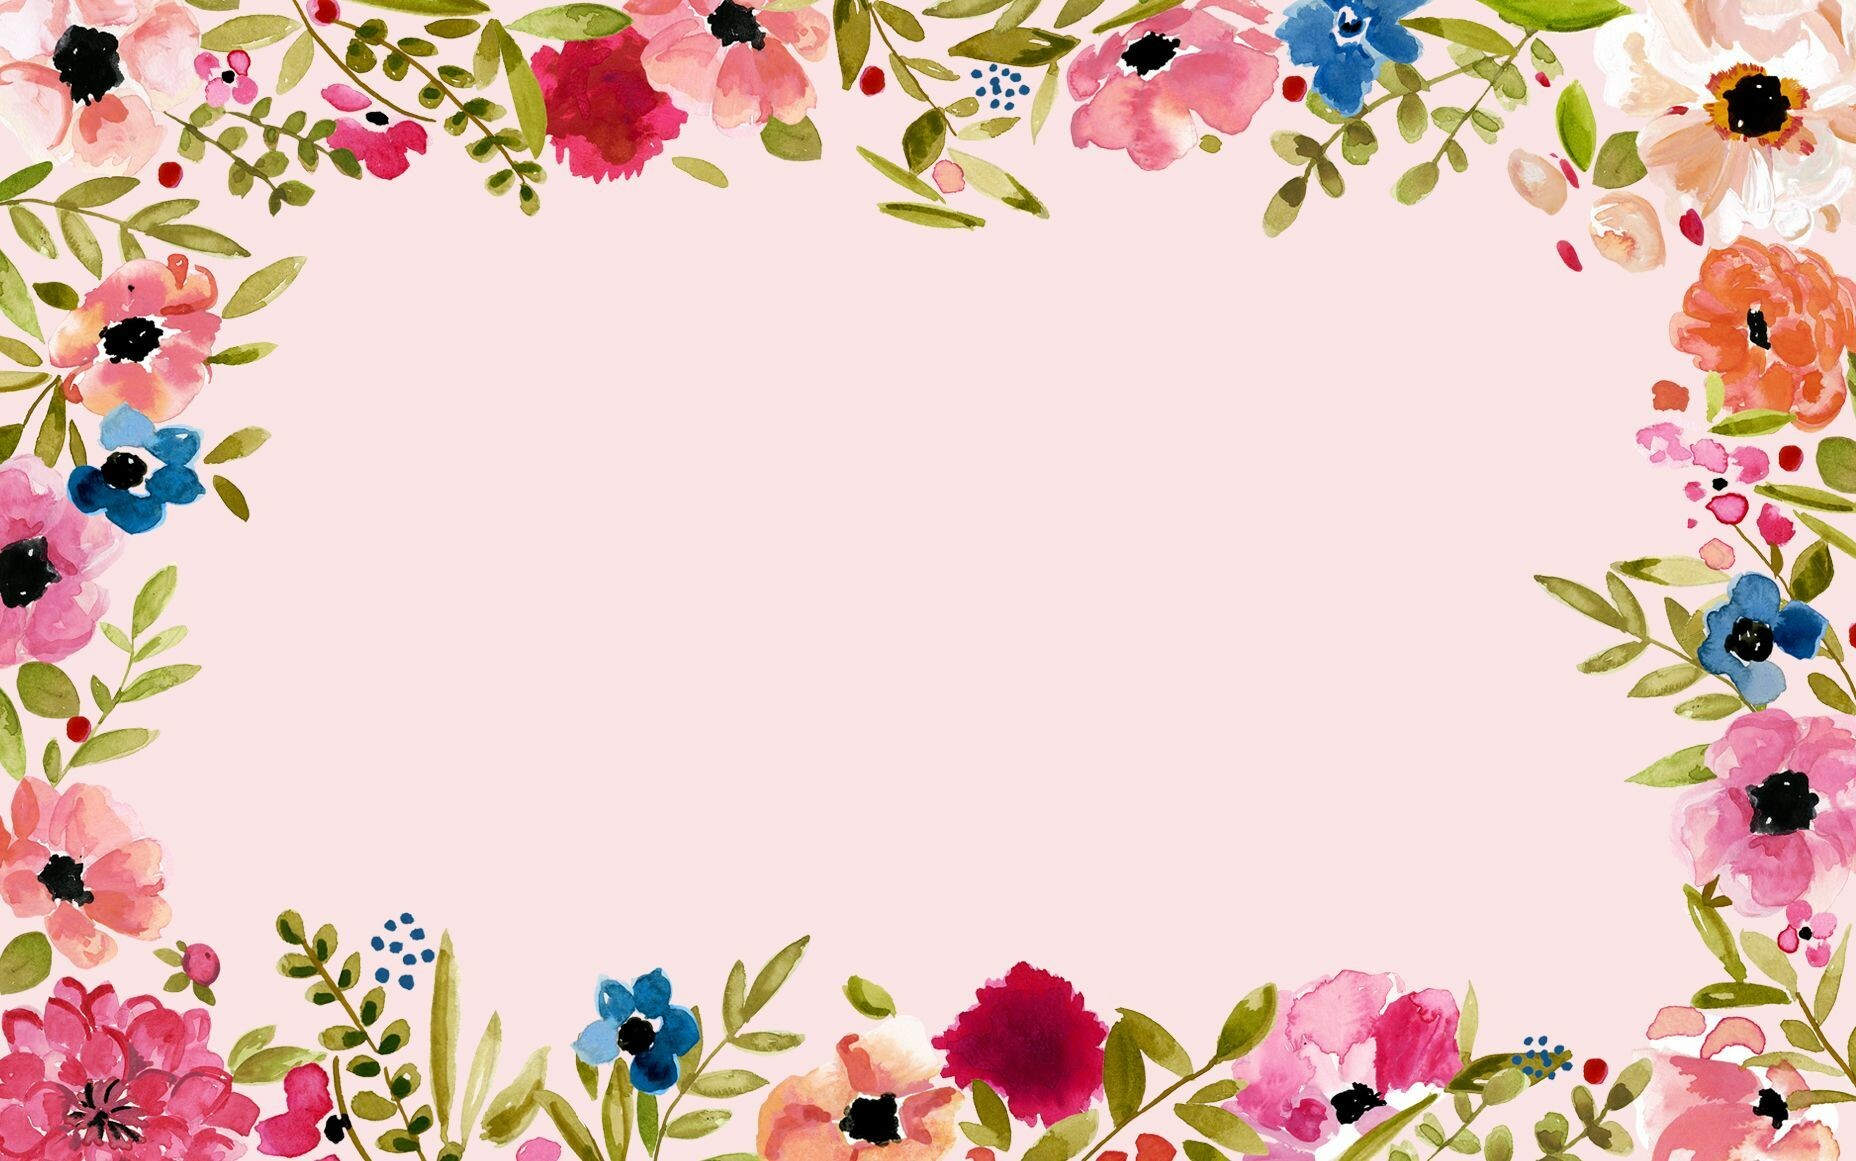 Floral Laptop Backgrounds